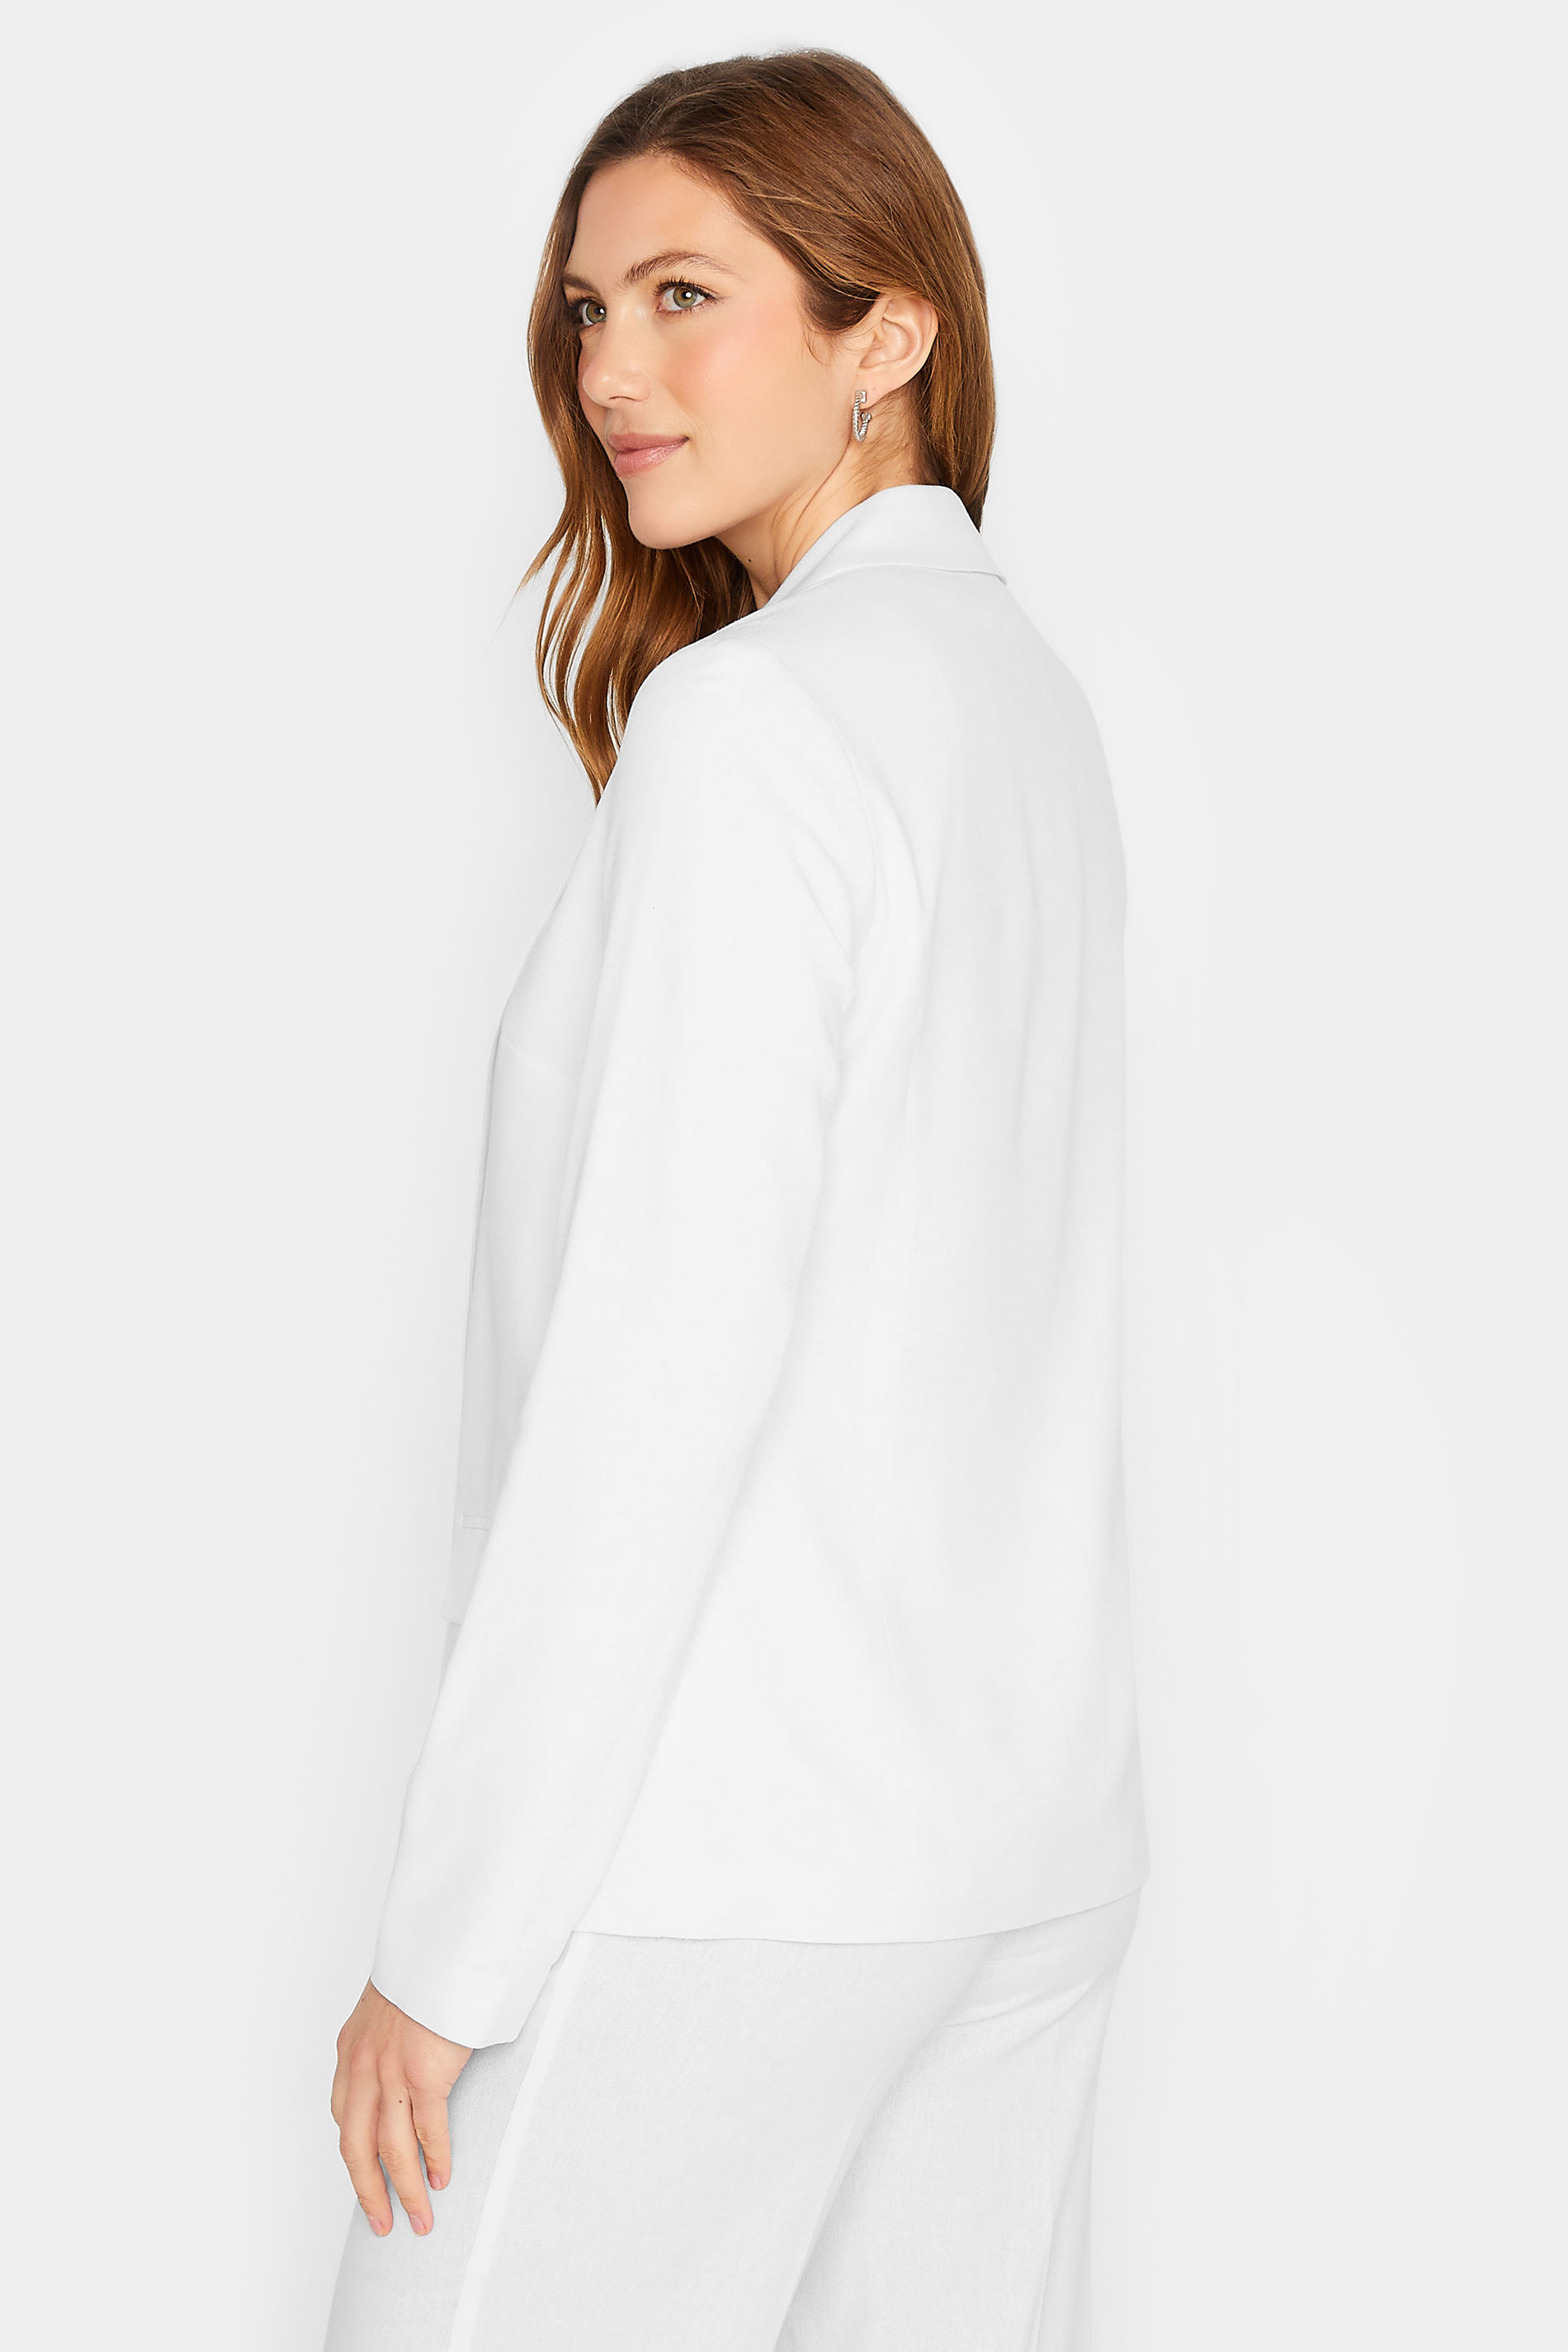 LTS Tall White Linen Look Blazer Jacket | Long Tall Sally  3